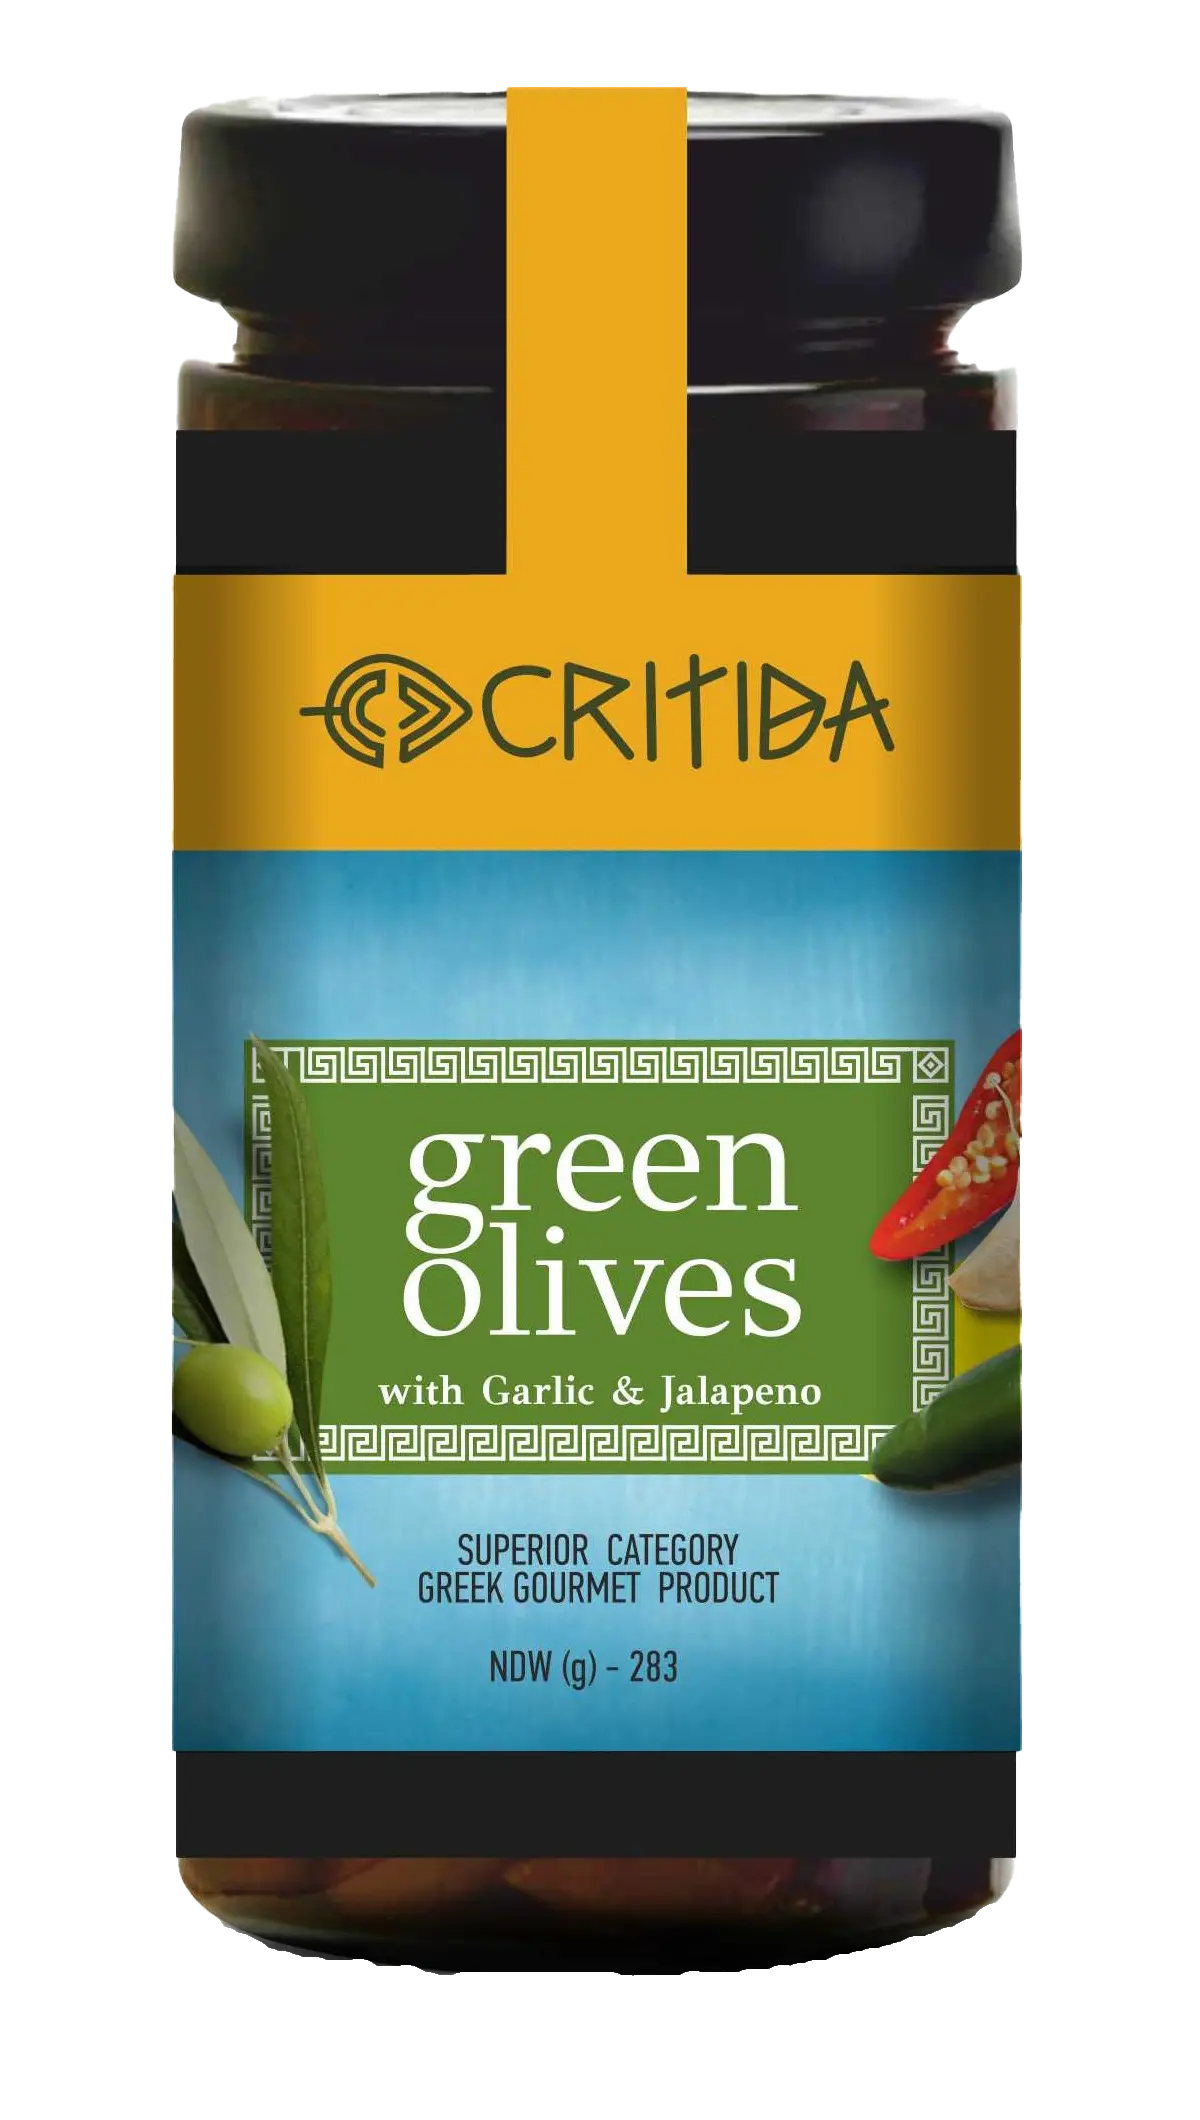 Grekiska bordsoliver - gröna oliver